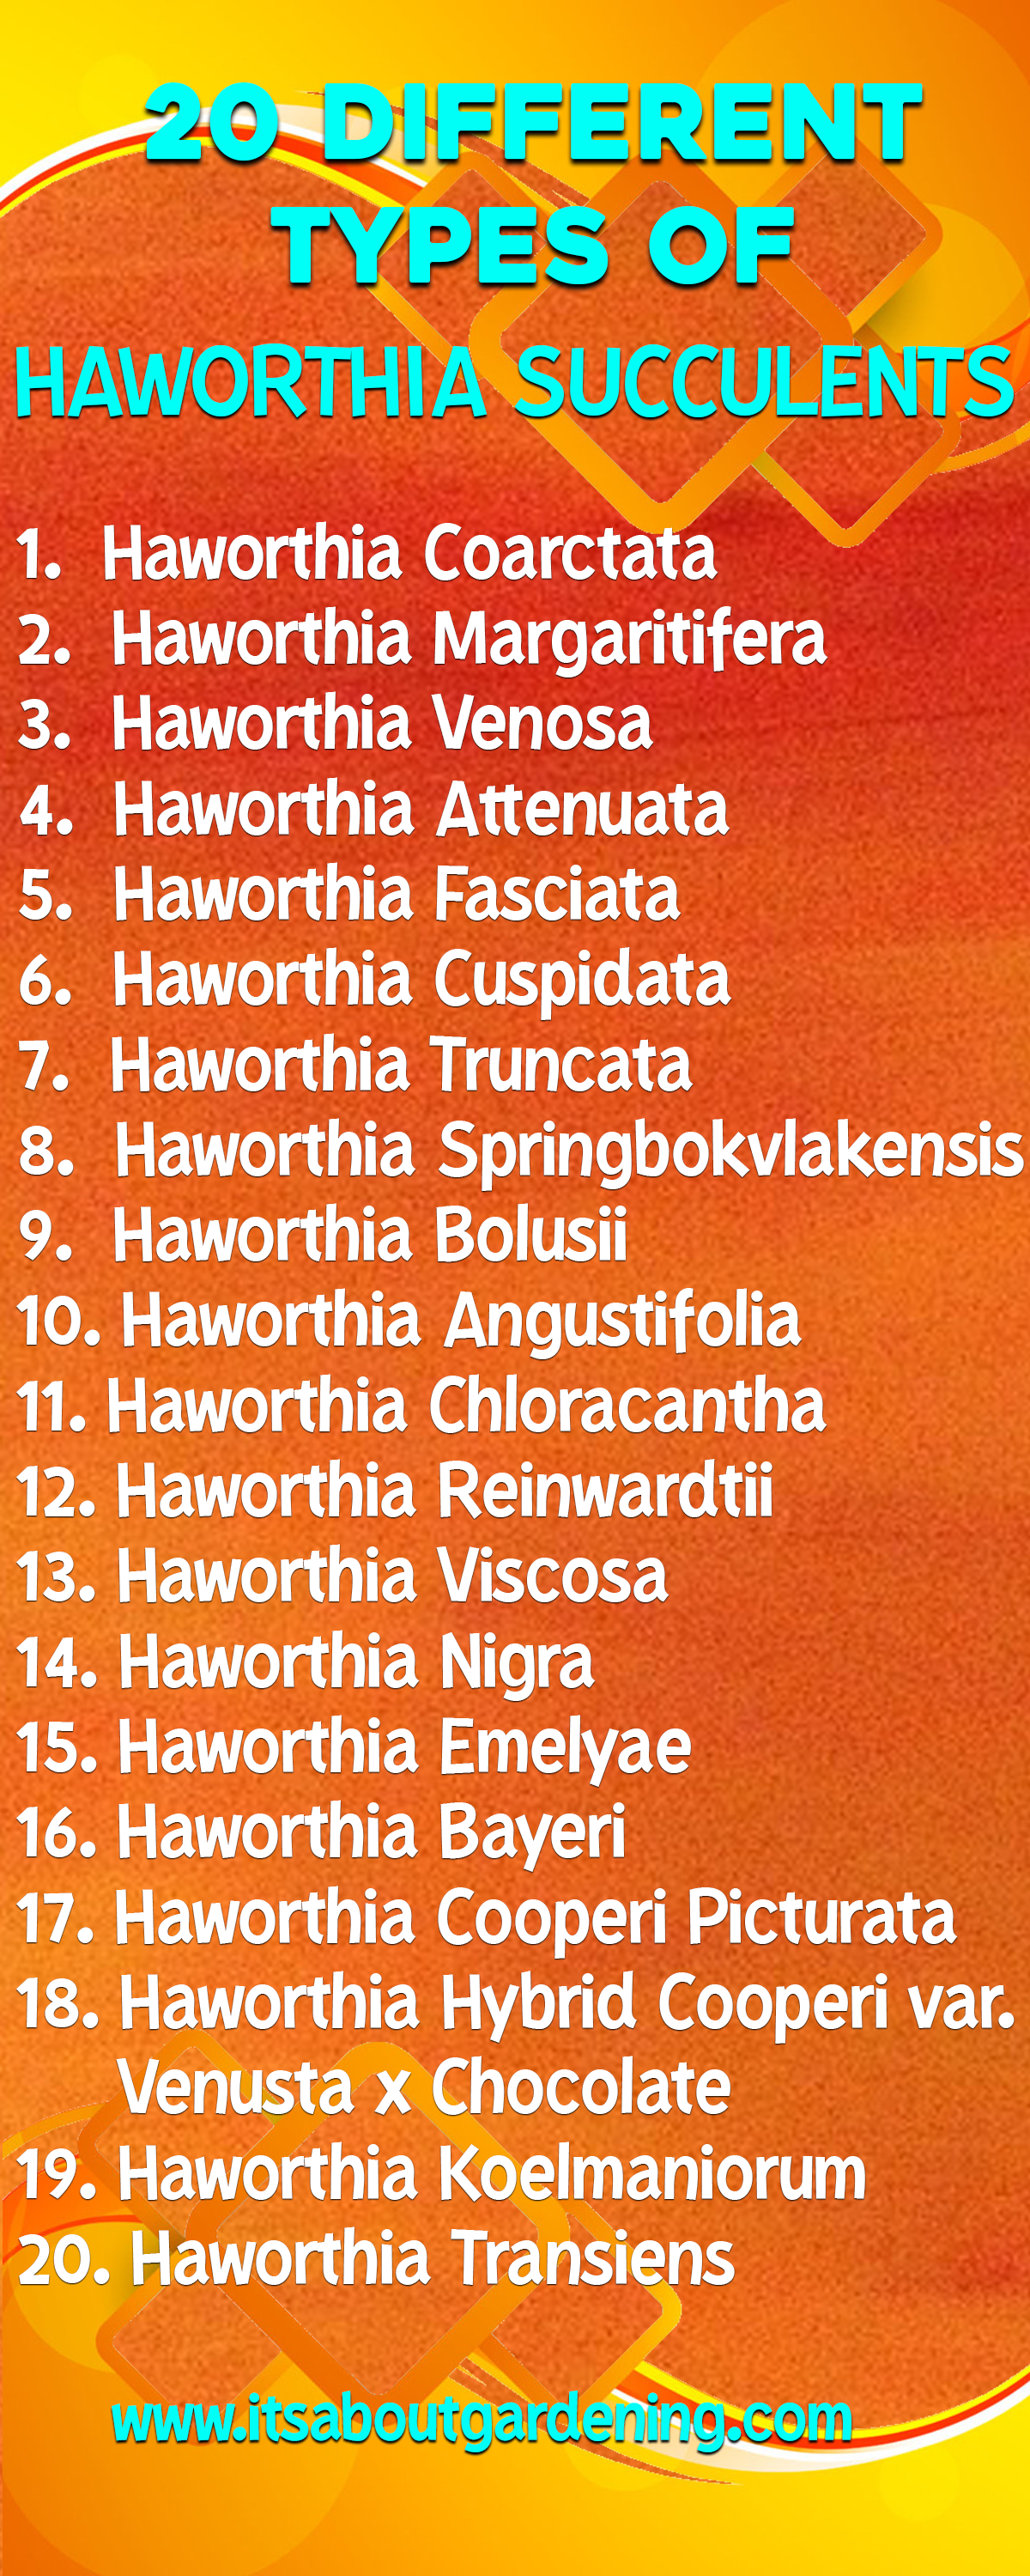 20 Different Types of Haworthia Succulent Infographic